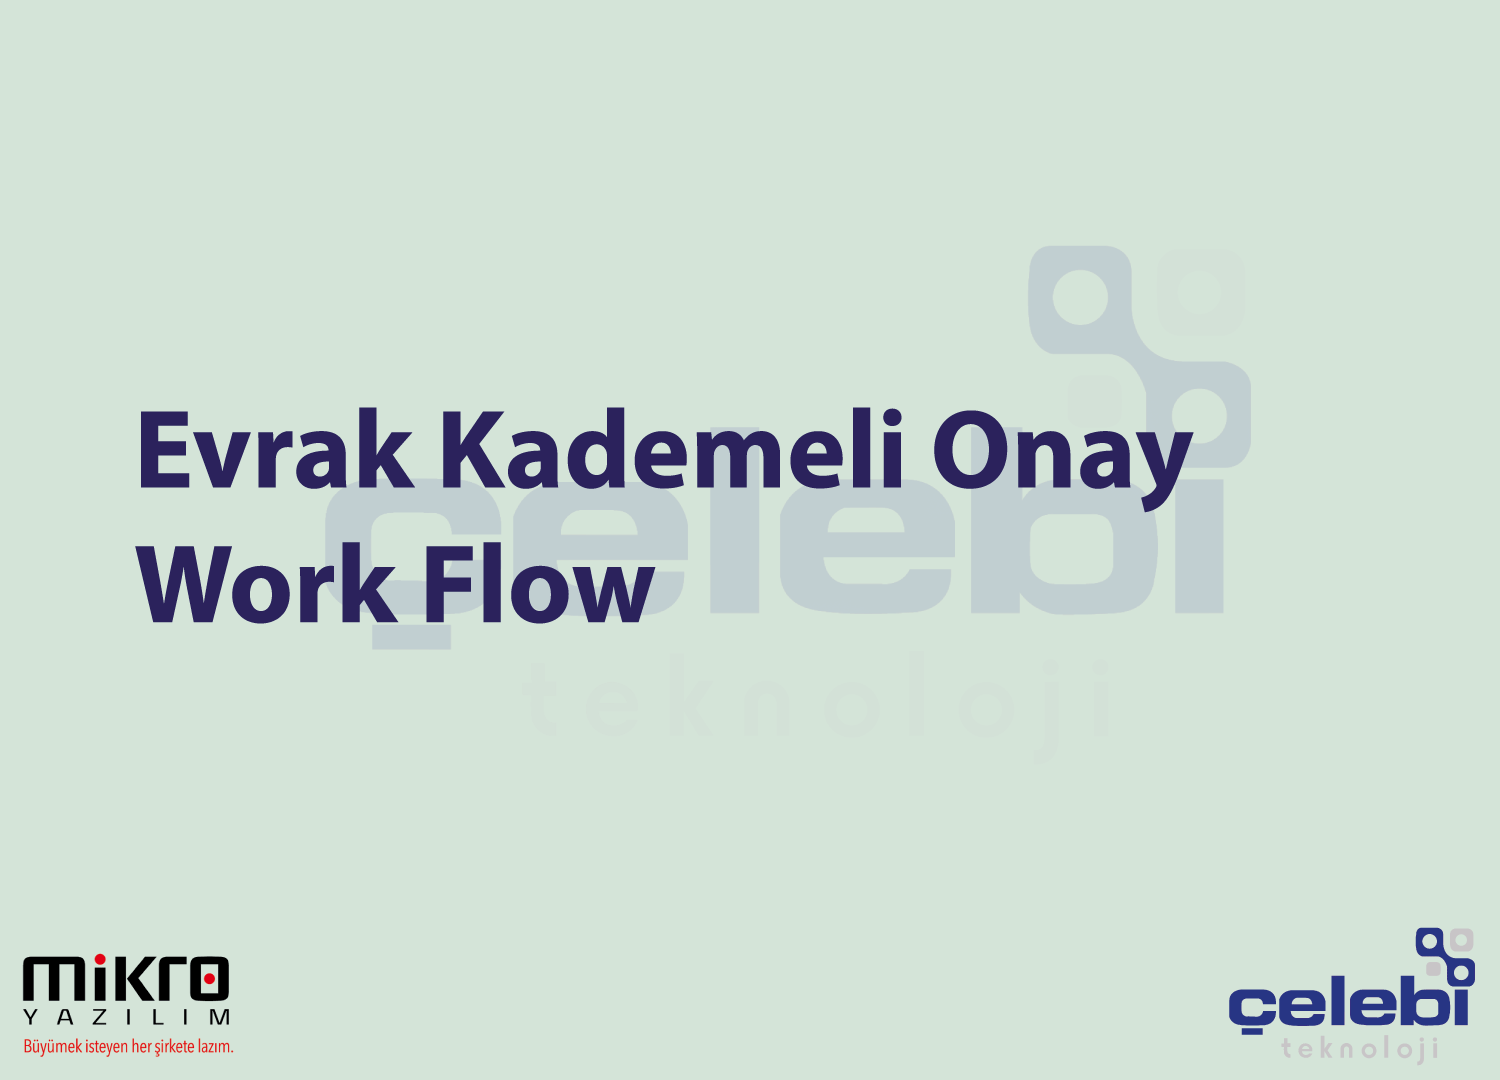 Evrak Kademeli Onay - Work Flow